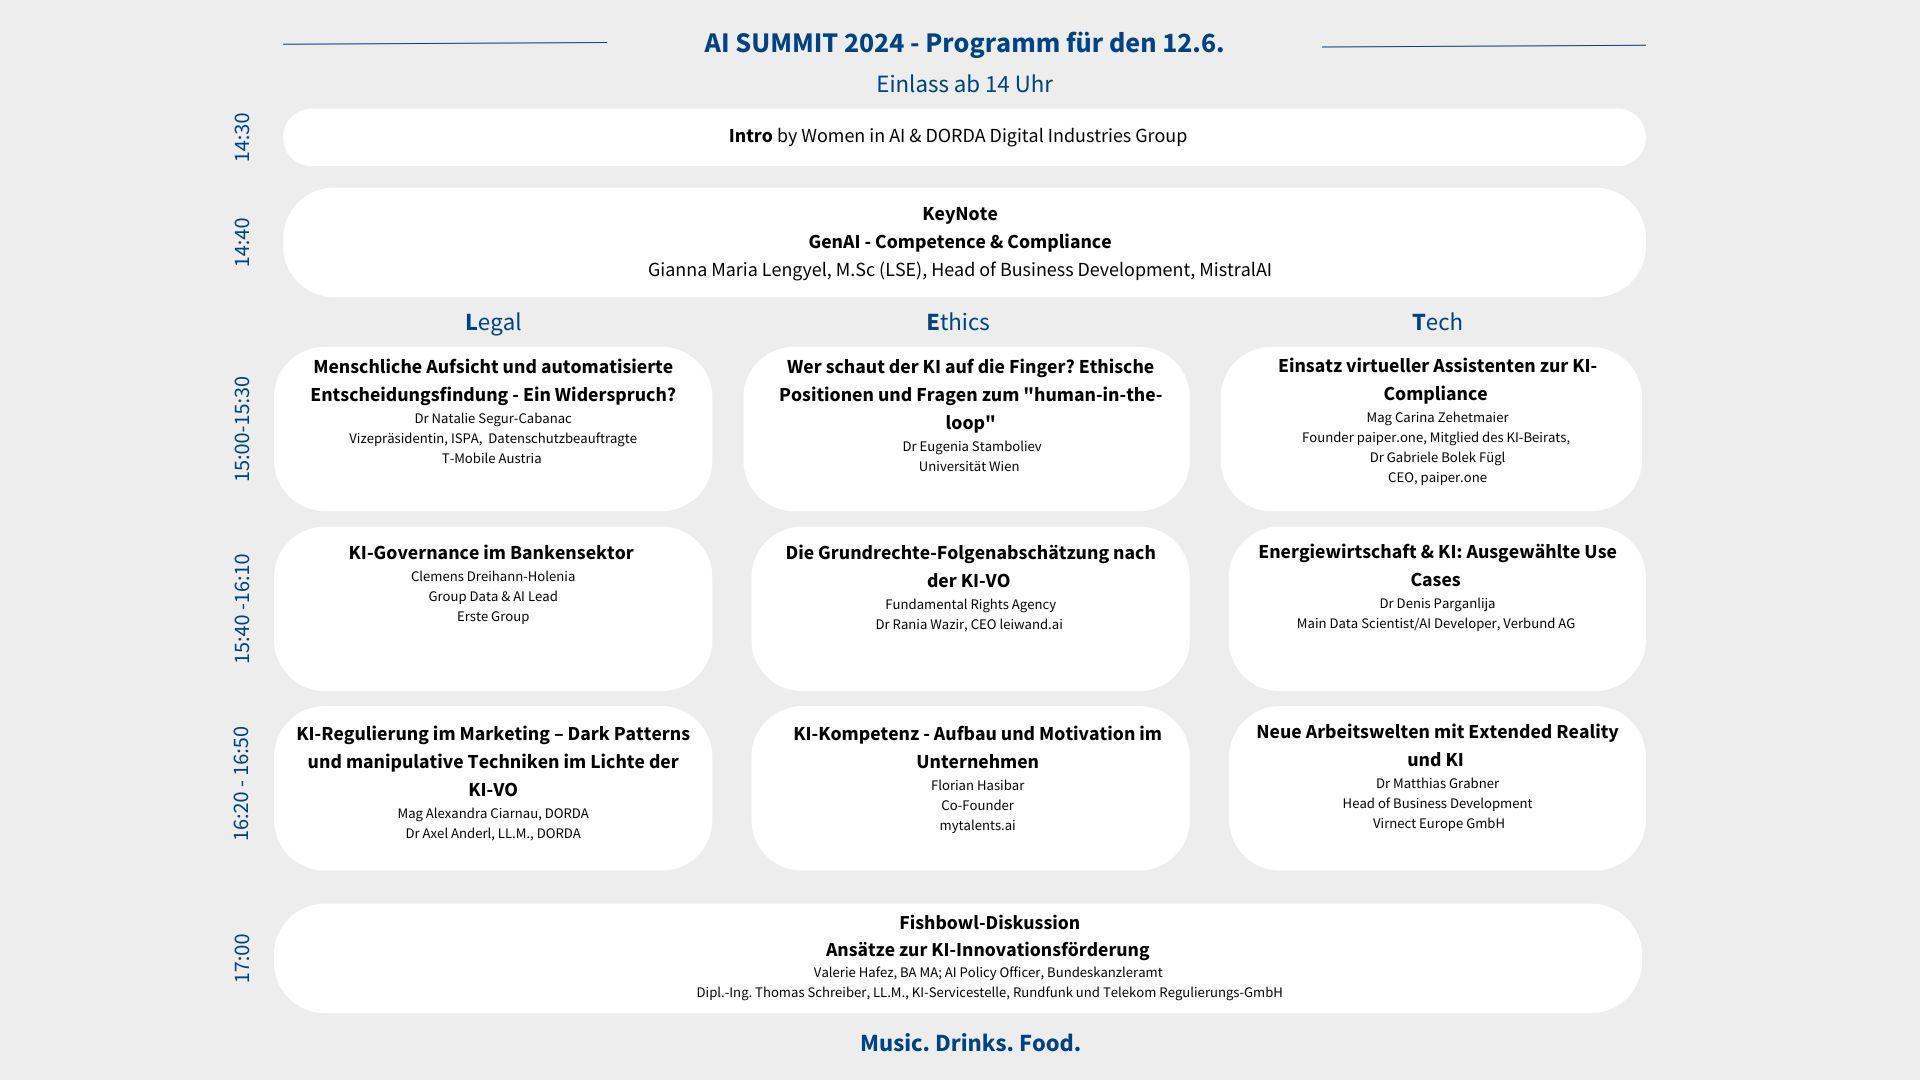 Programm zum AI Summit 2024